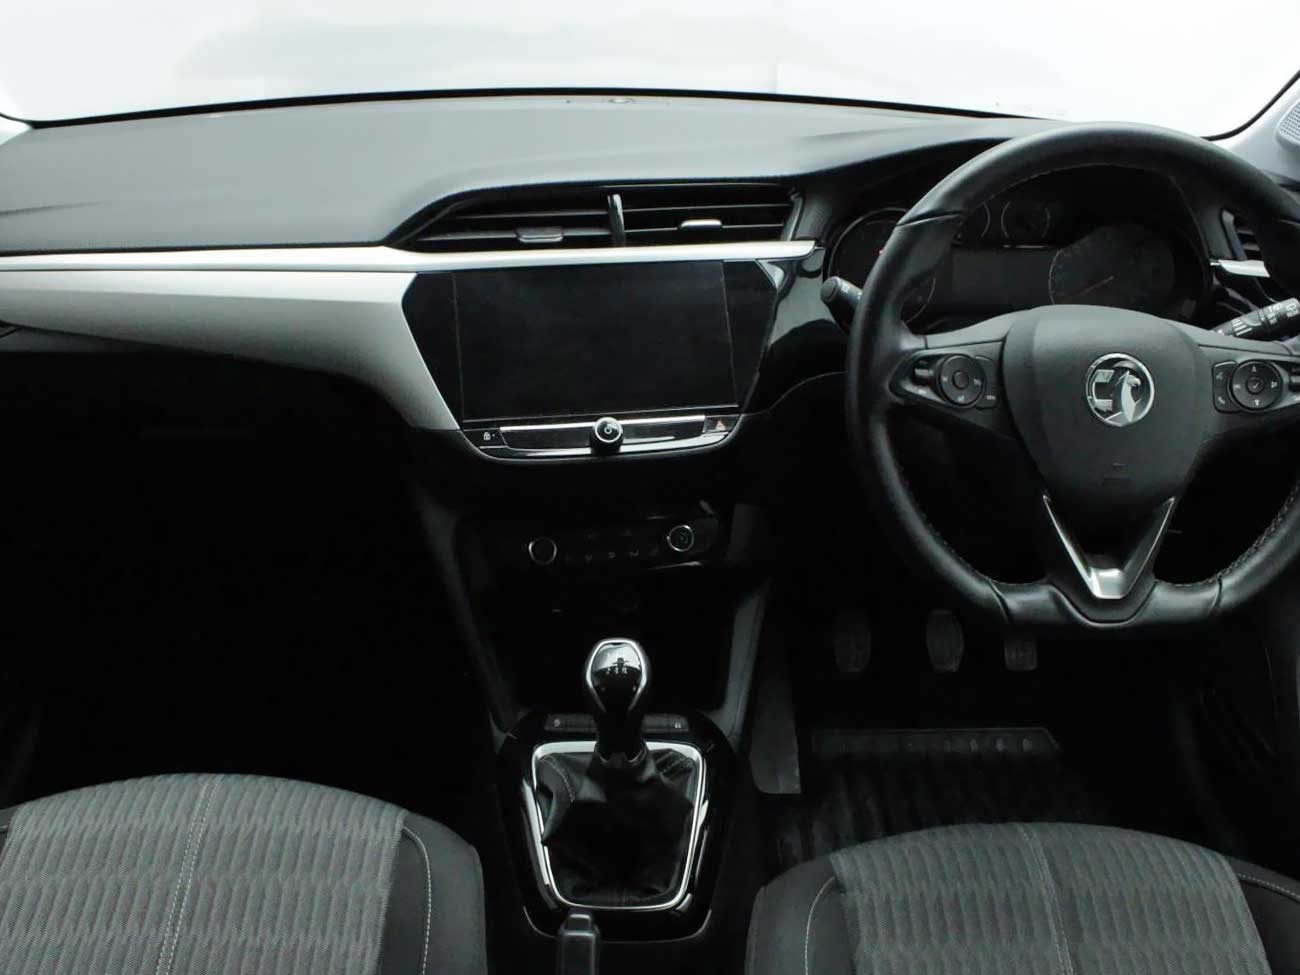 Vauxhall Corsa dash view